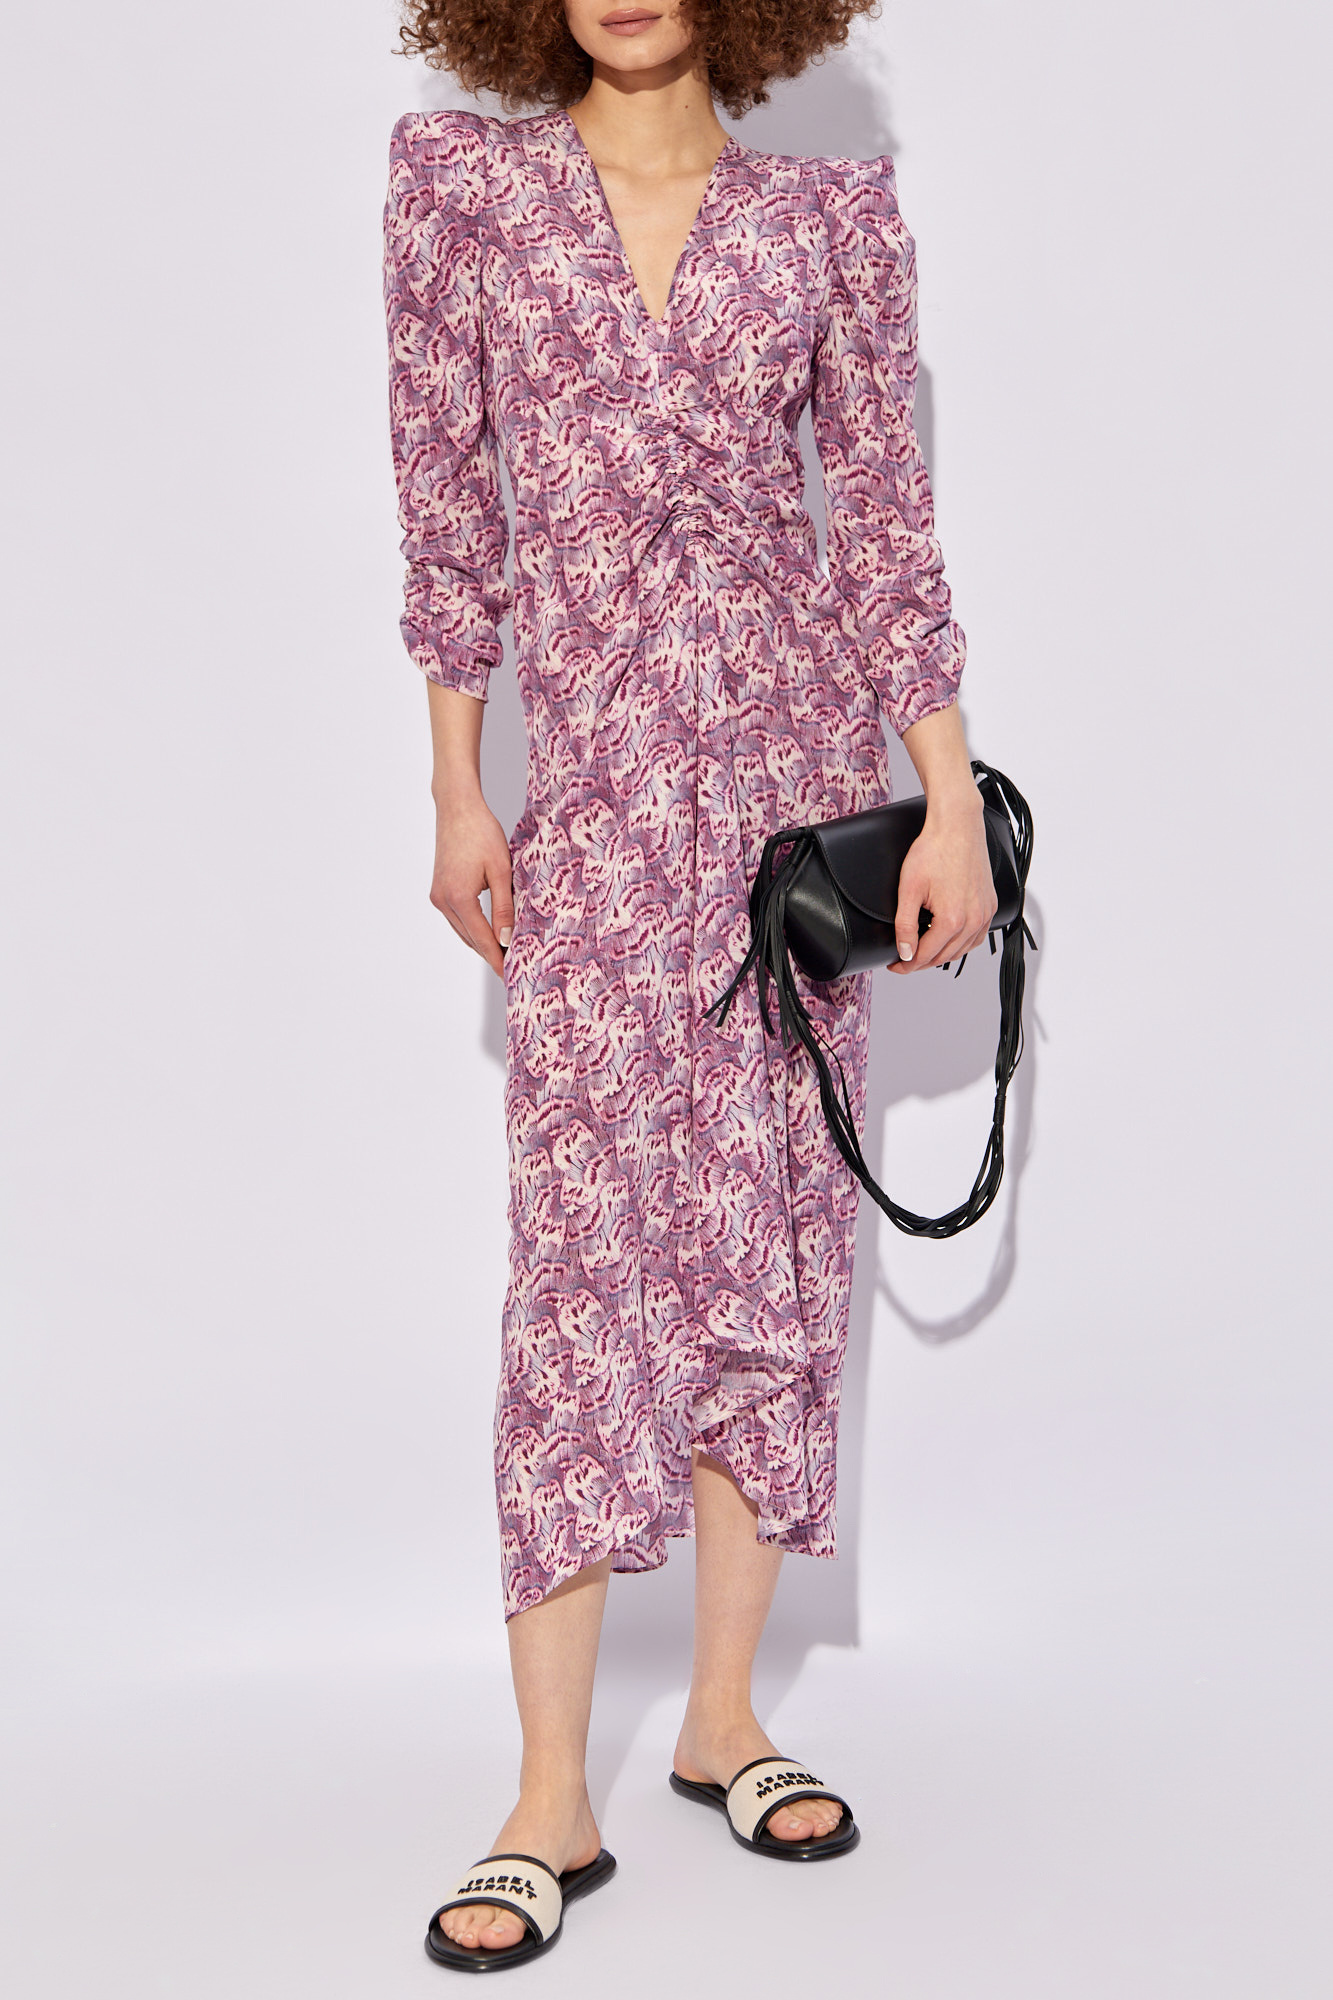 Isabel Marant ‘Albini’ patterned dress